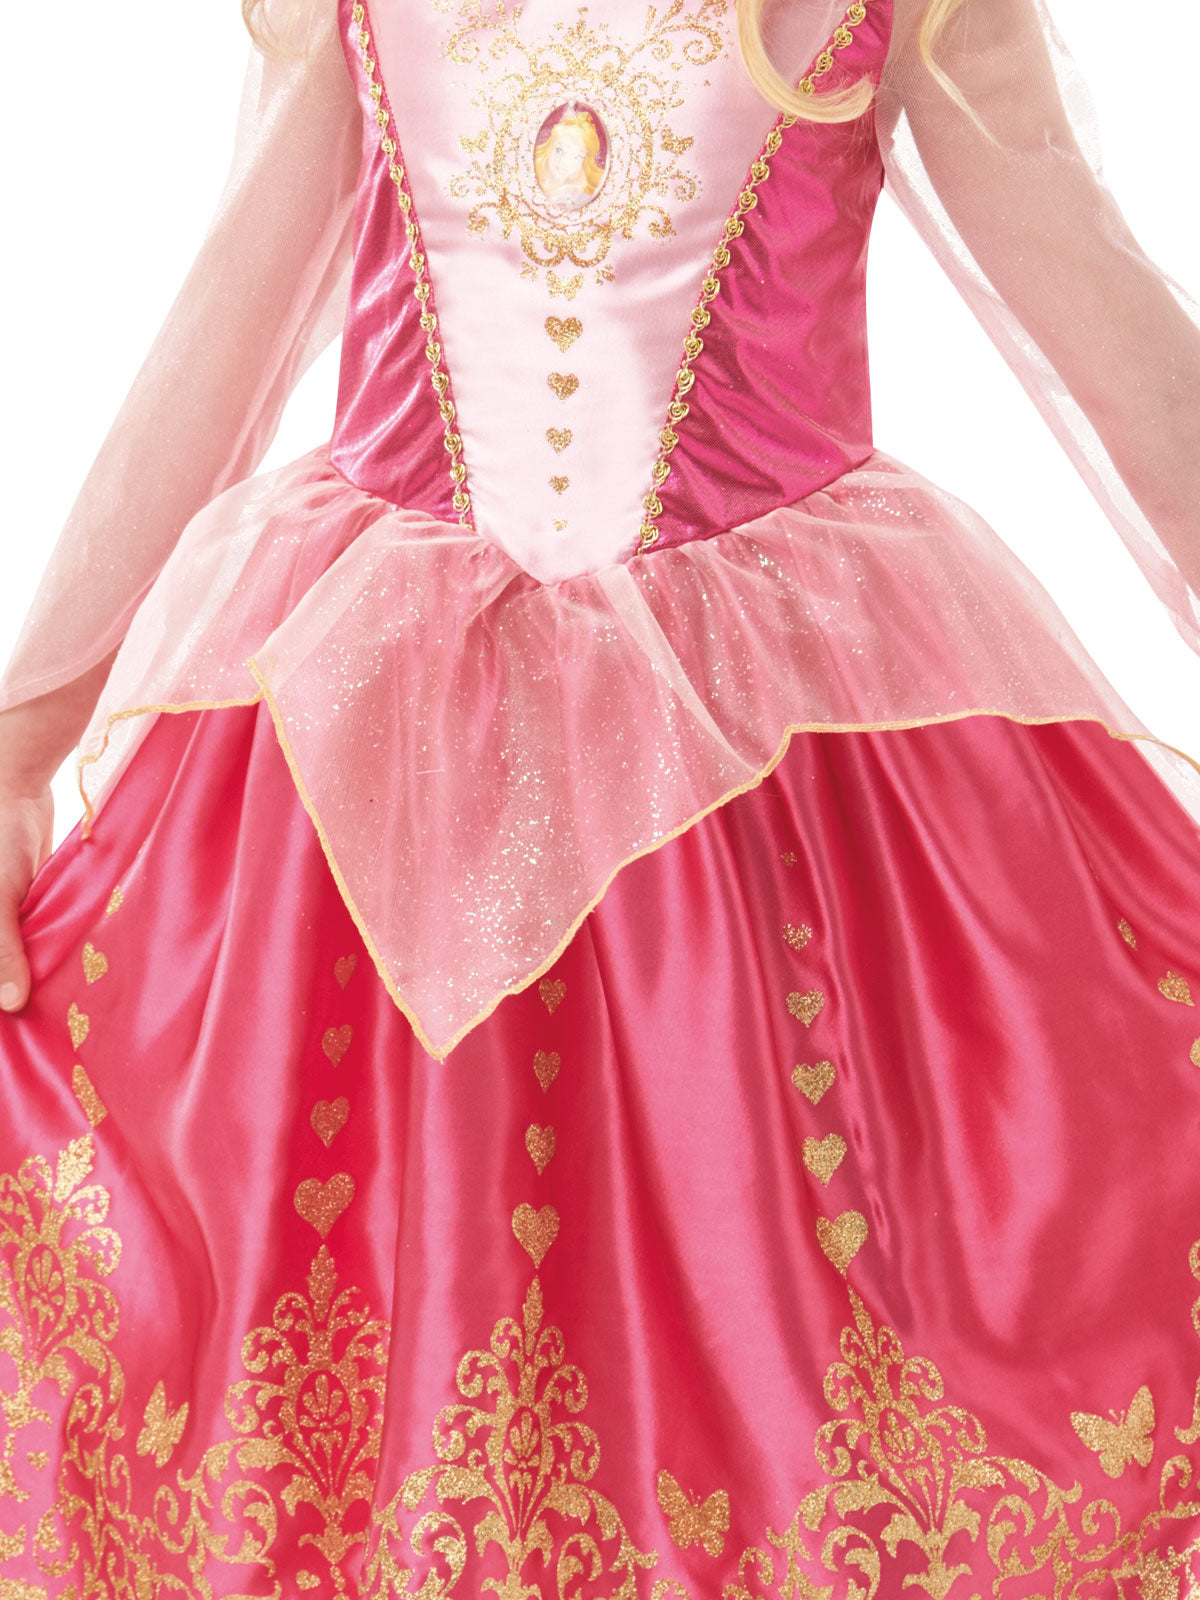 Sleeping Beauty Gem Princess Girl's Costume Disney Princess Licensed Child Costume